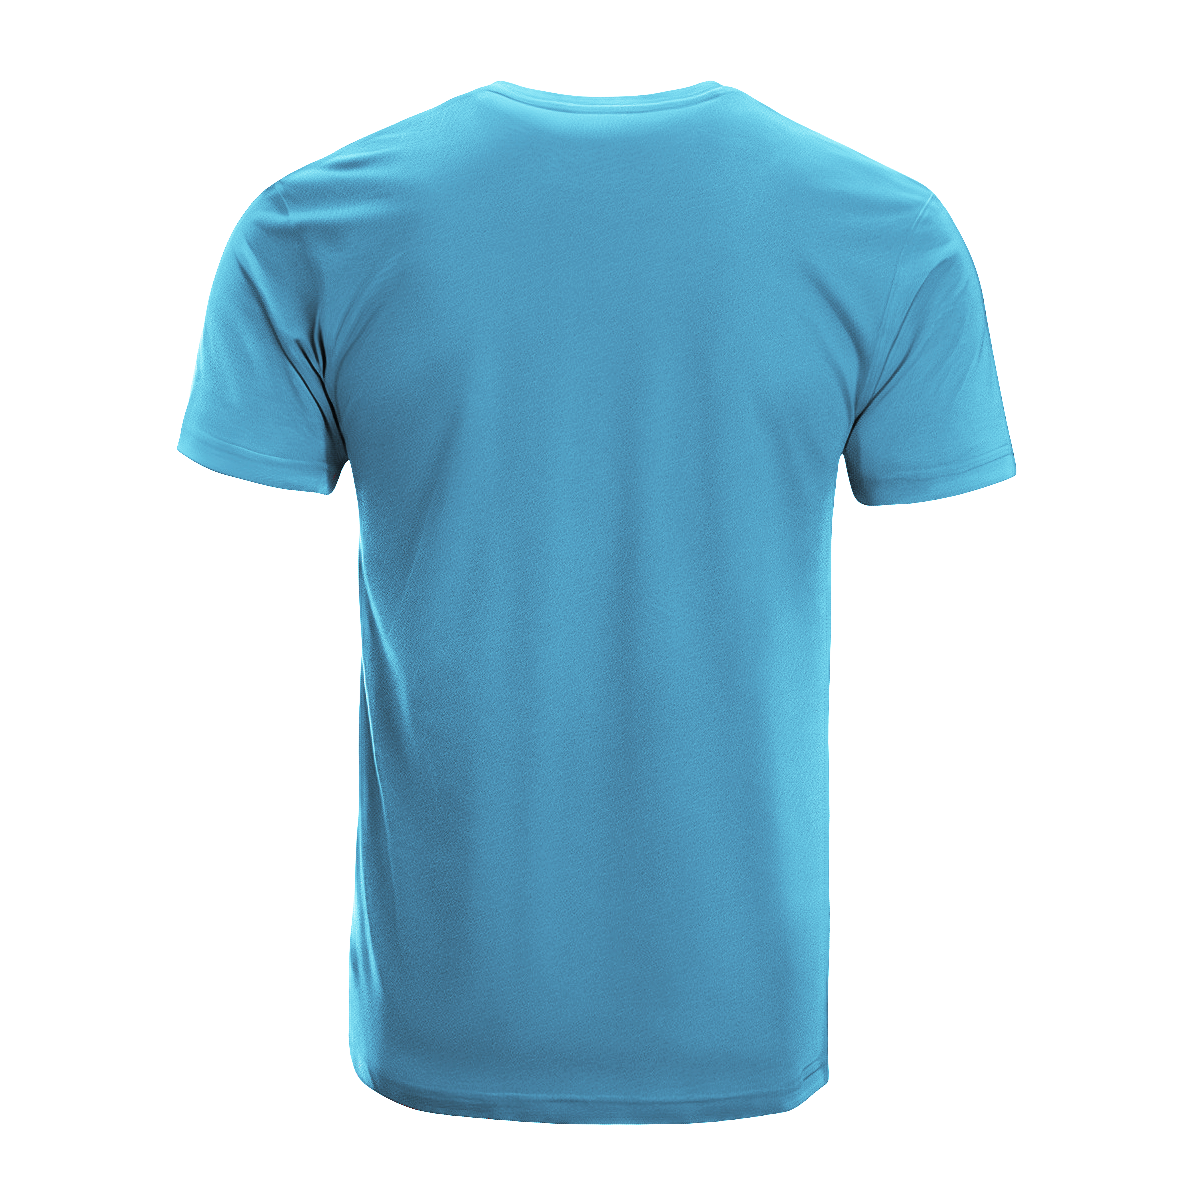 Jackson Tartan Crest T-shirt - I'm not yelling style